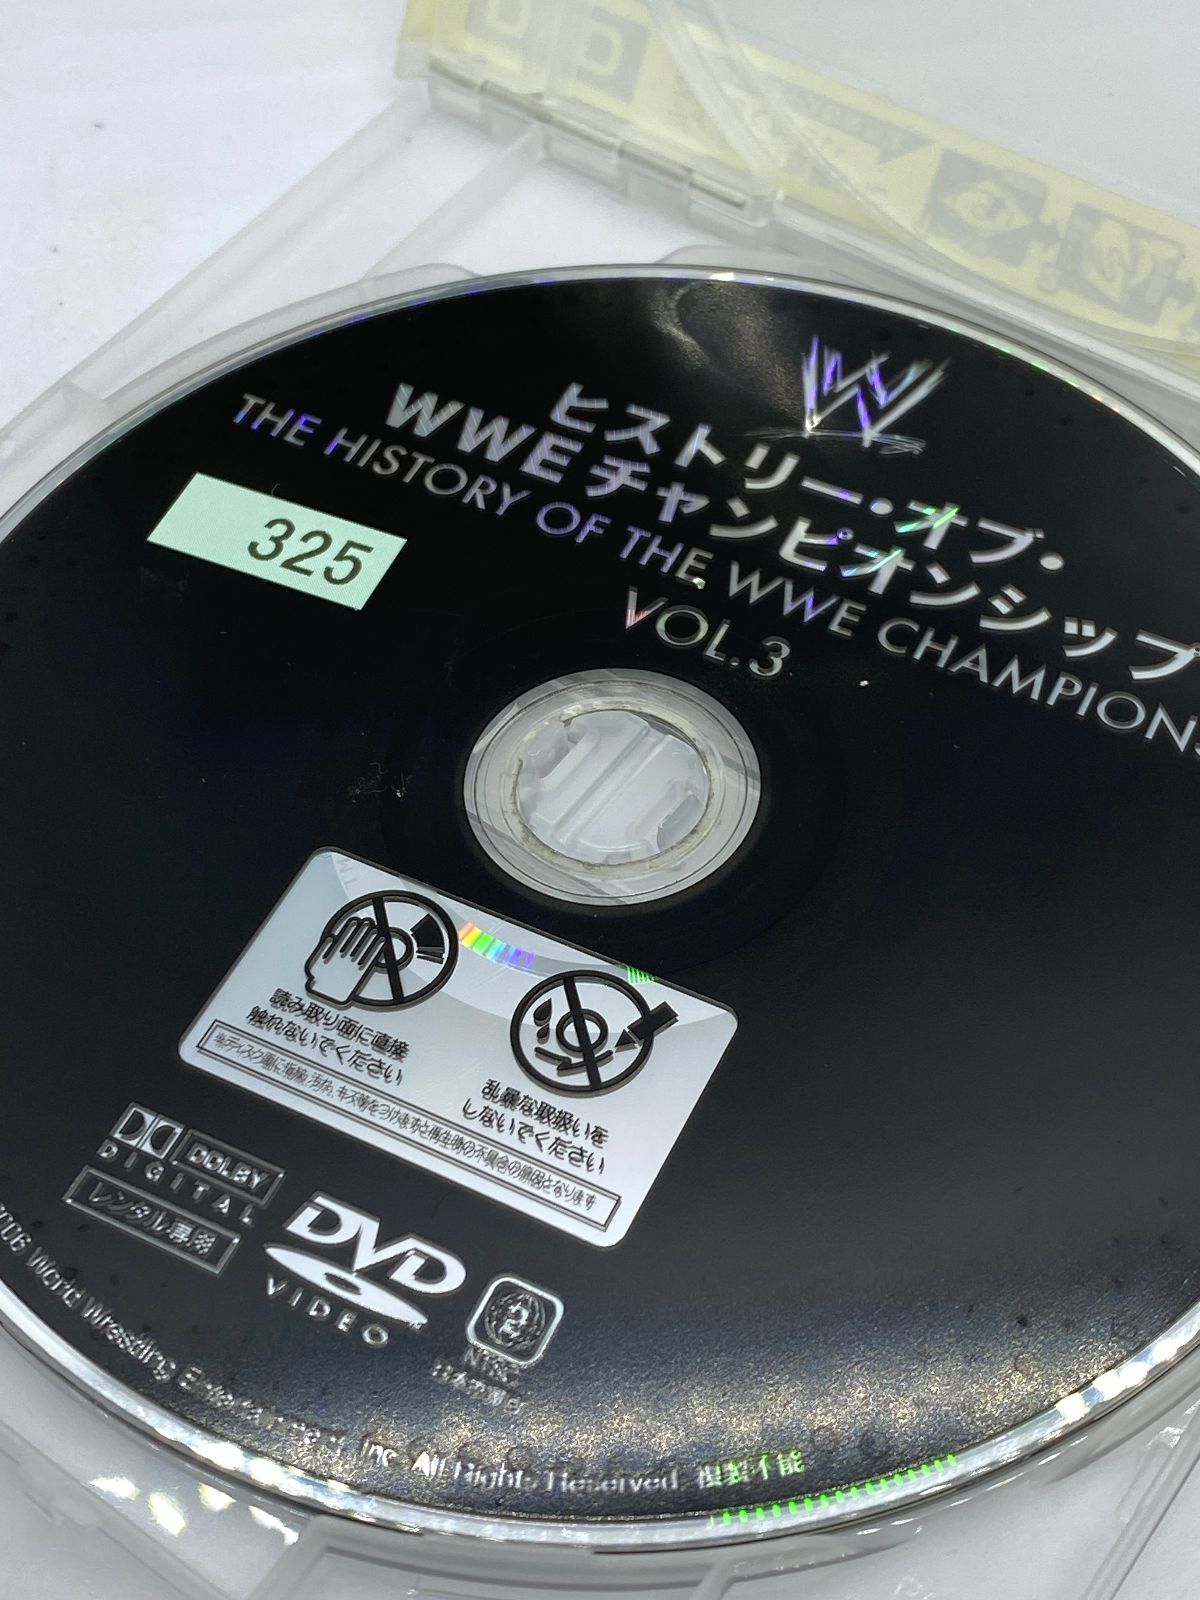 WWE ヒストリー・オブ・WWE チャンピオンシップ Vol.3 DVD レンタル落ち - メルカリ